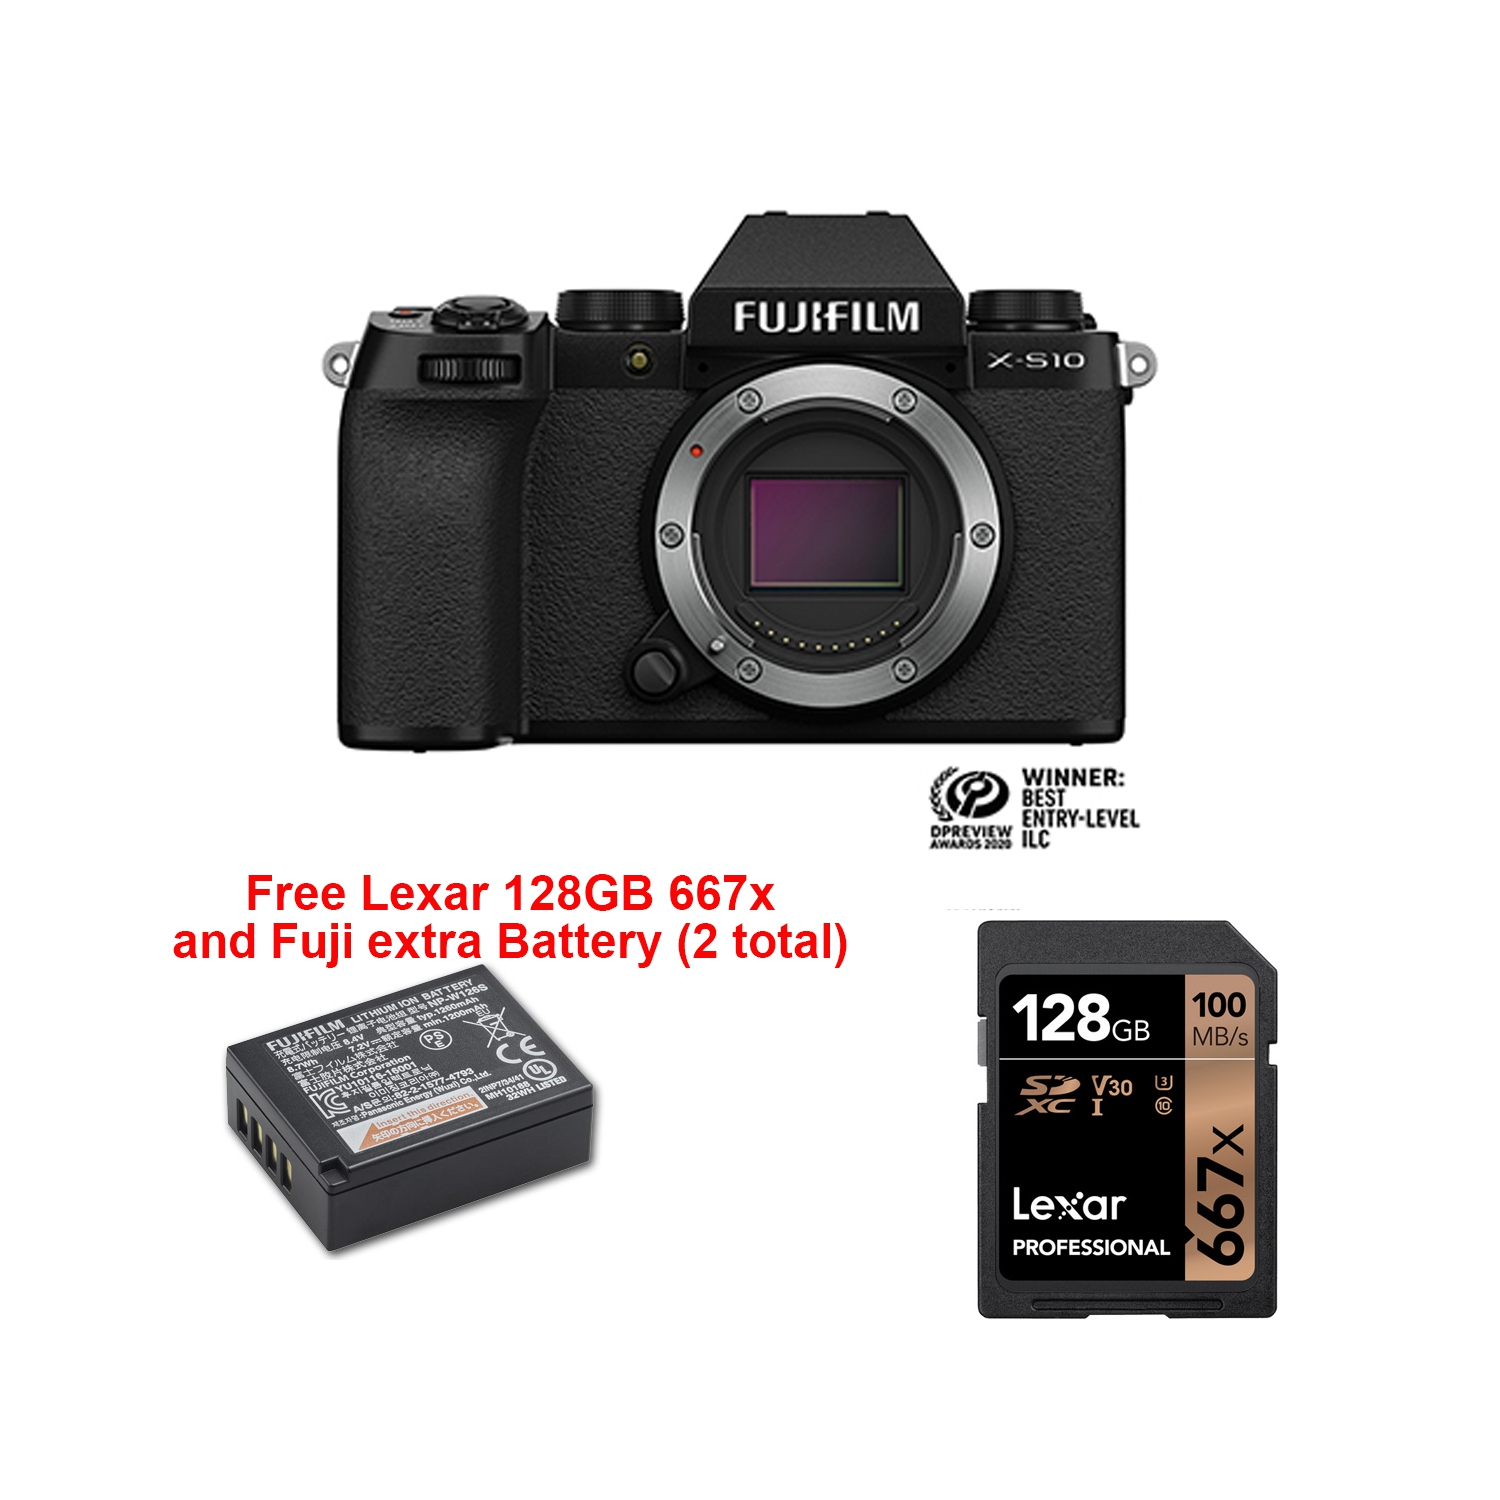 FUJIFILM X-S10 Mirrorless Digital Camera Black with Fujifilm NP-W126S Battery Pack and Lexar Media 128GB 95MB/s SDXC Memory Card